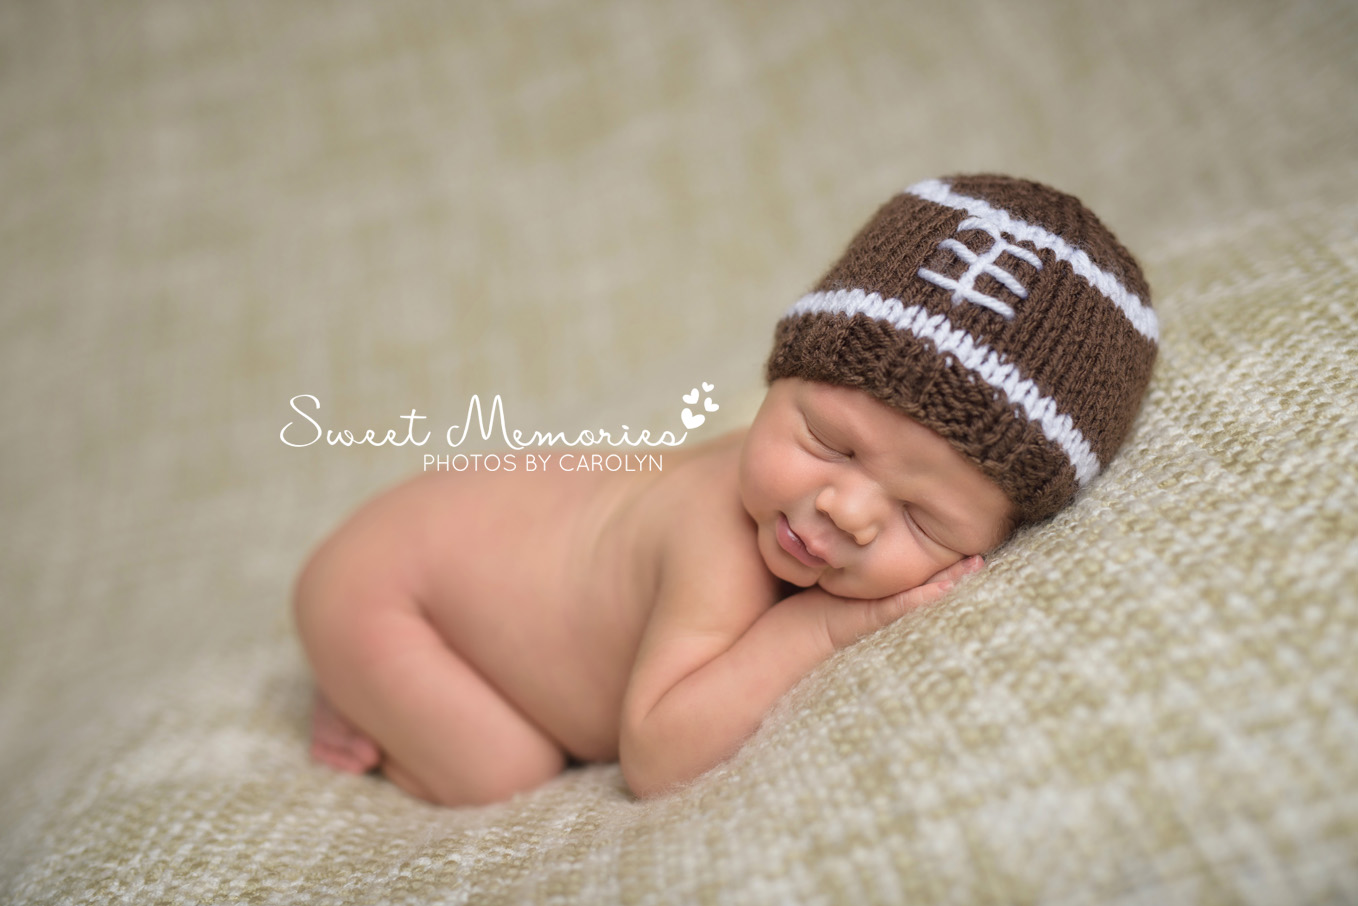 Sweet Memories Photos by Carolyn | Willow Grove PA | Bucks County Montgomery County Newborn Infant Baby Photographer | newborn baby boy sleeping with football hat